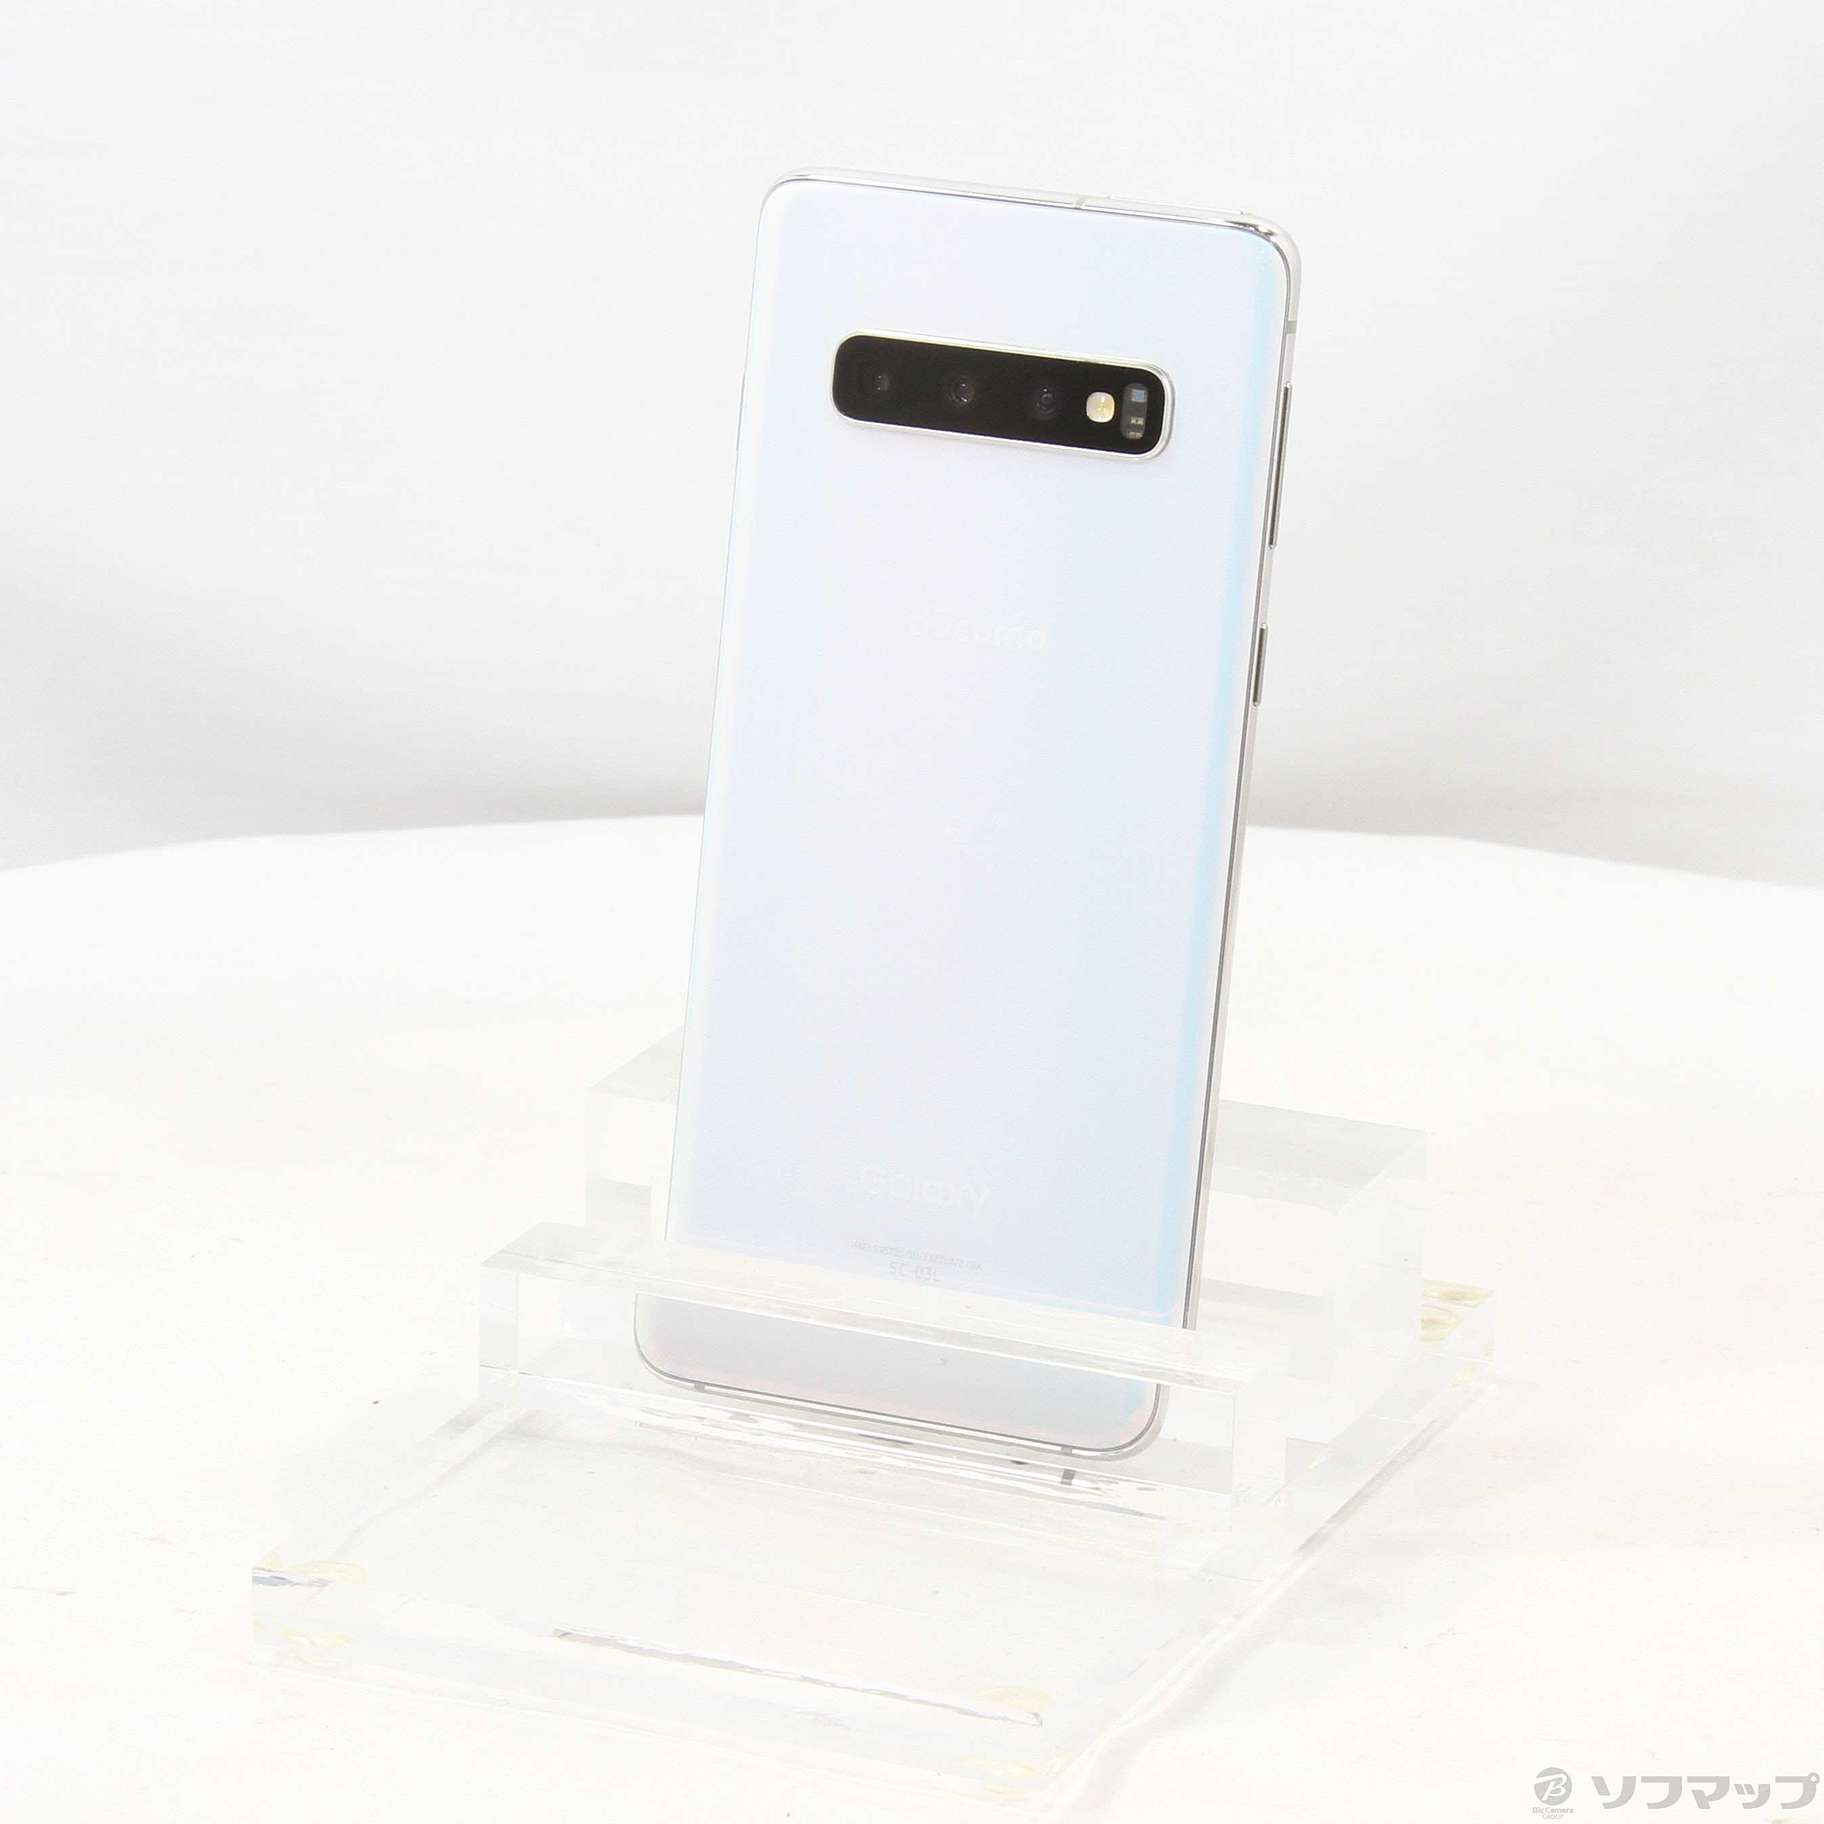 Galaxy S10 Prism White 128GB ドコモ SIMフリー - mhrclean.com.br